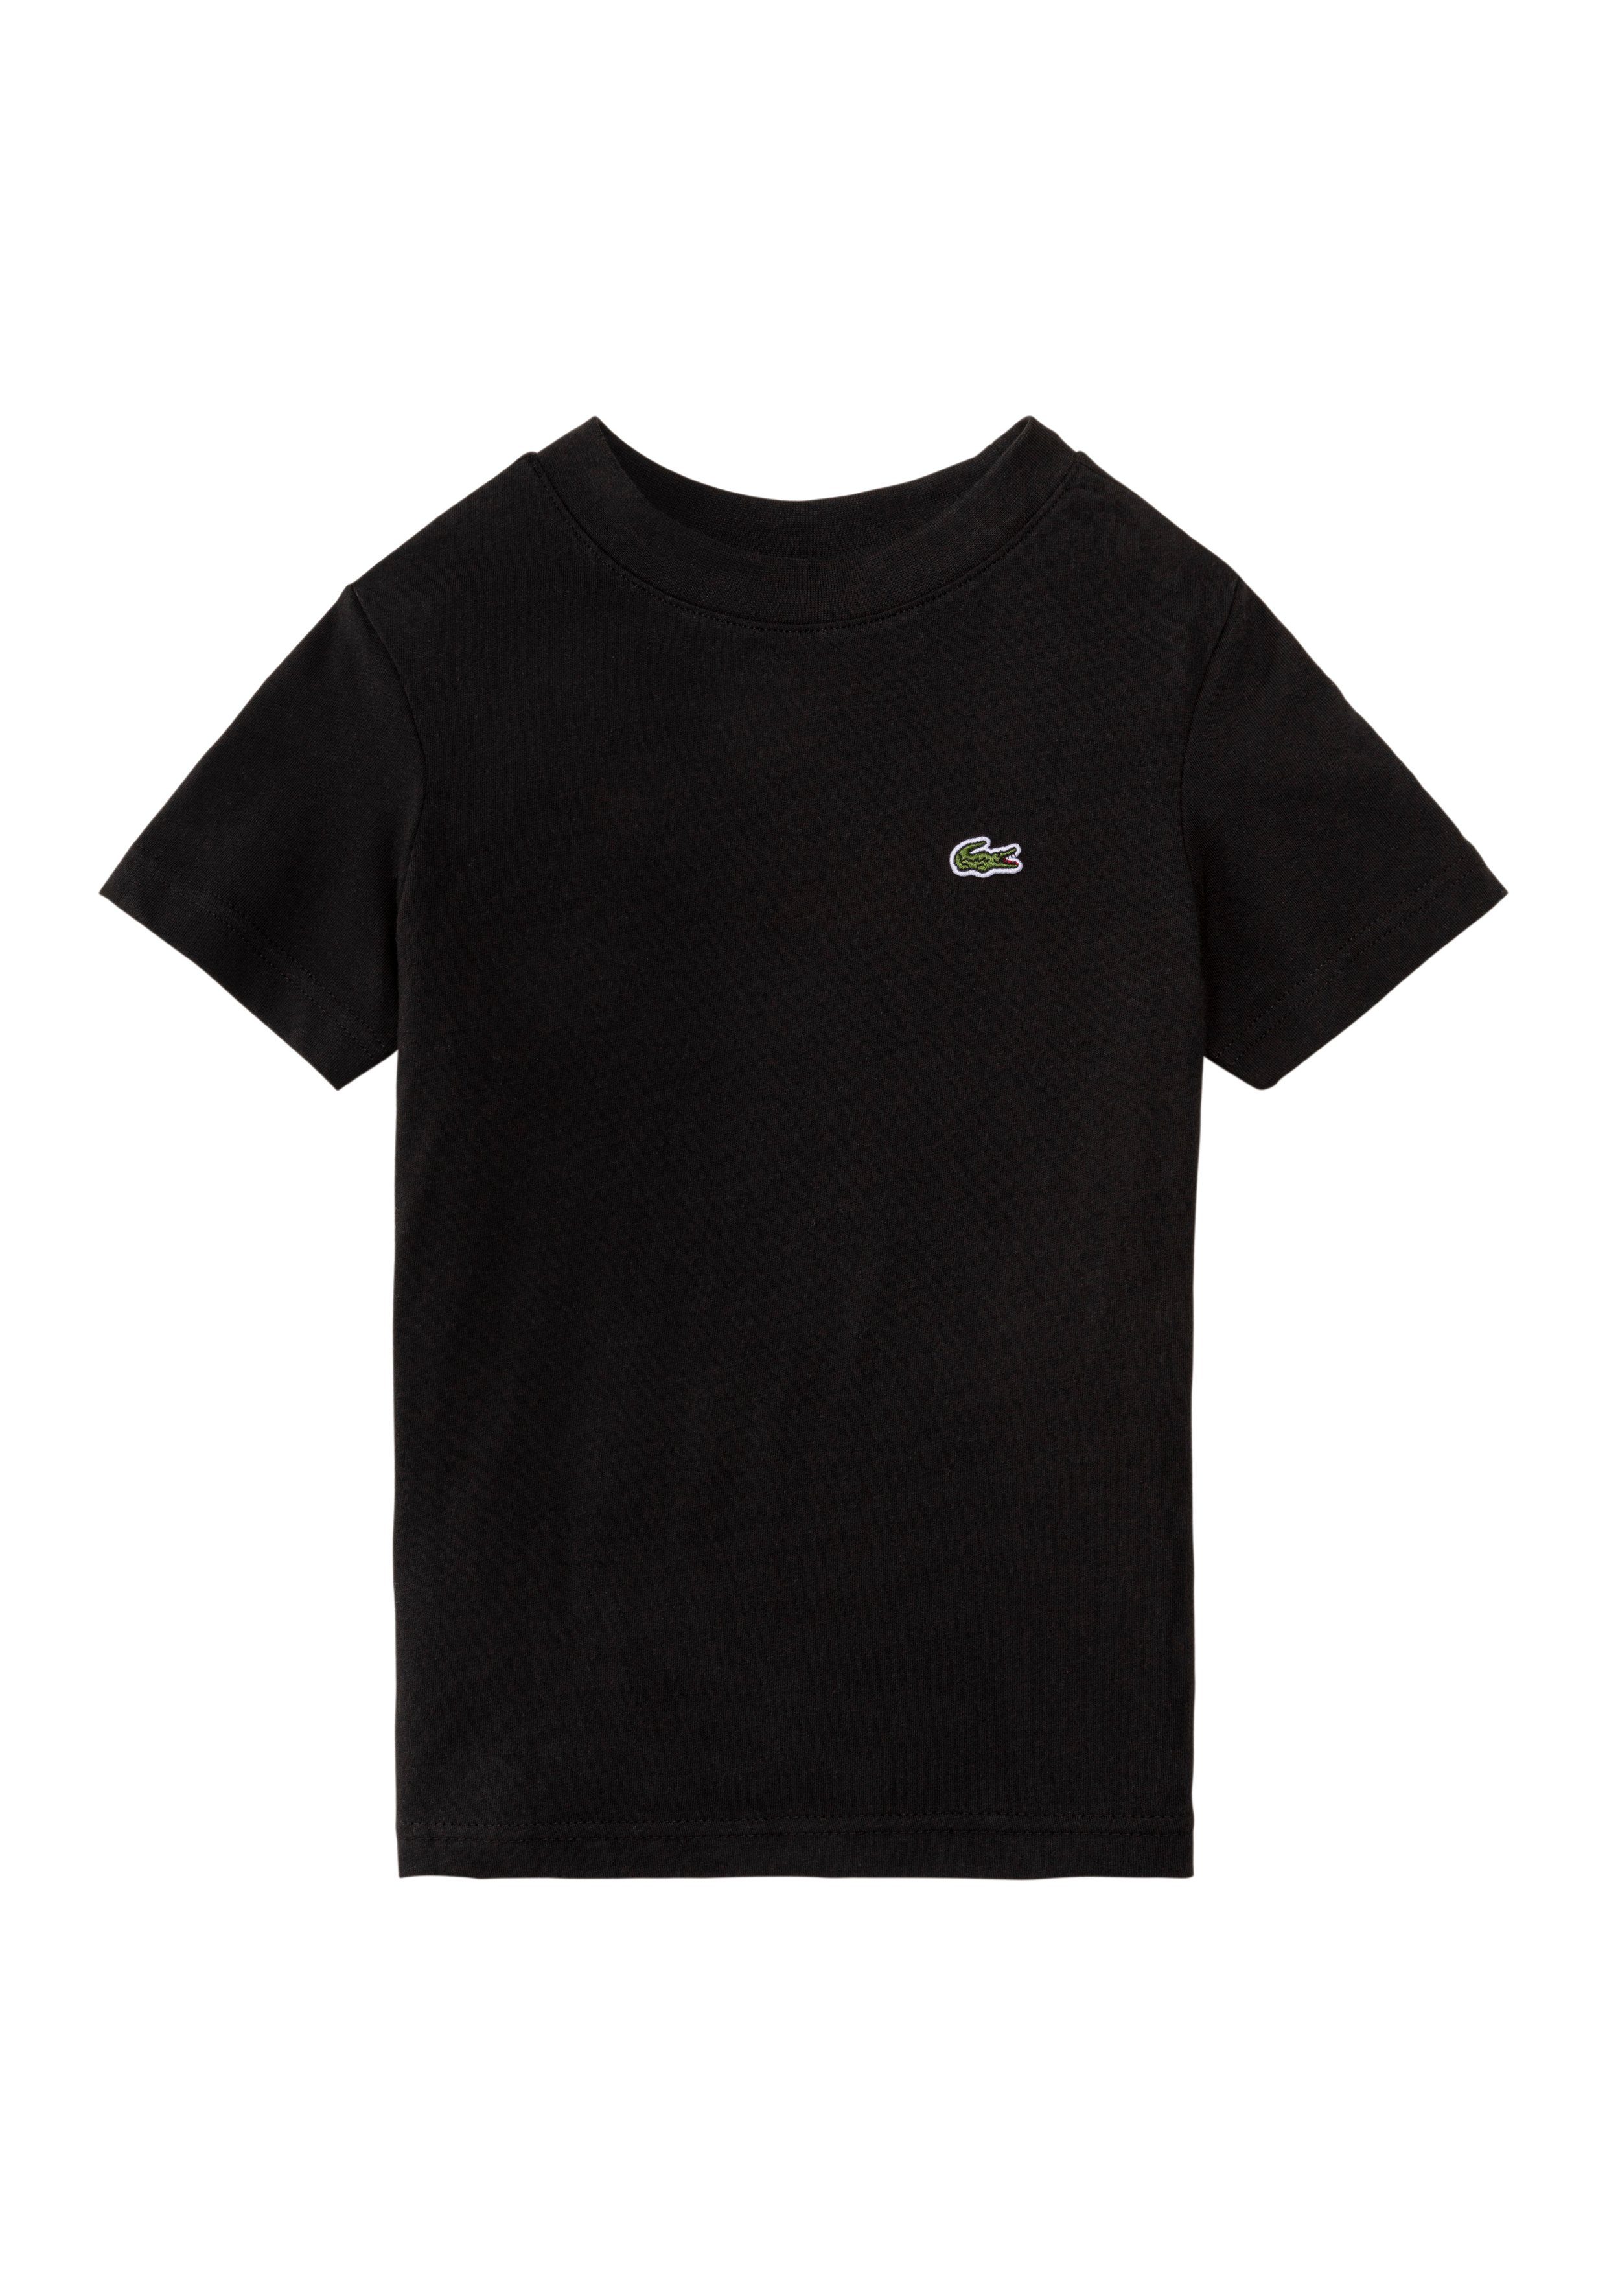 schwarz T-Shirt Lacoste mit Lacoste-Krokodil Brusthöhe auf